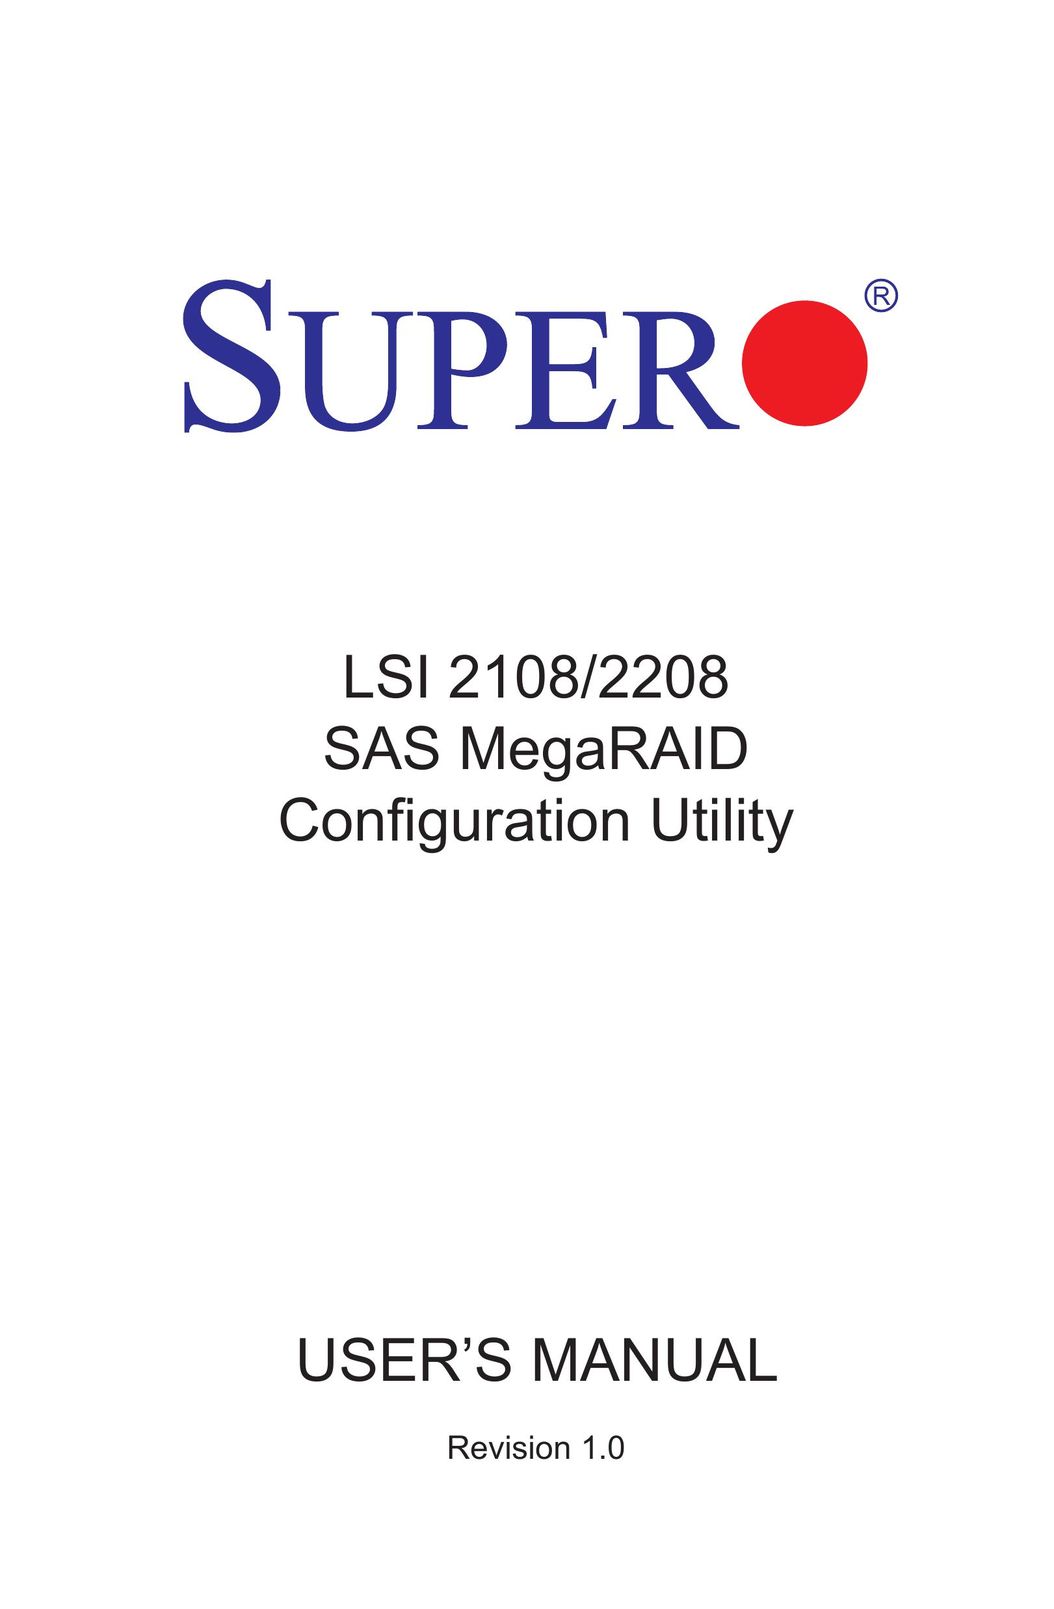 SUPER MICRO Computer LSI 2108/2208 Computer Hardware User Manual